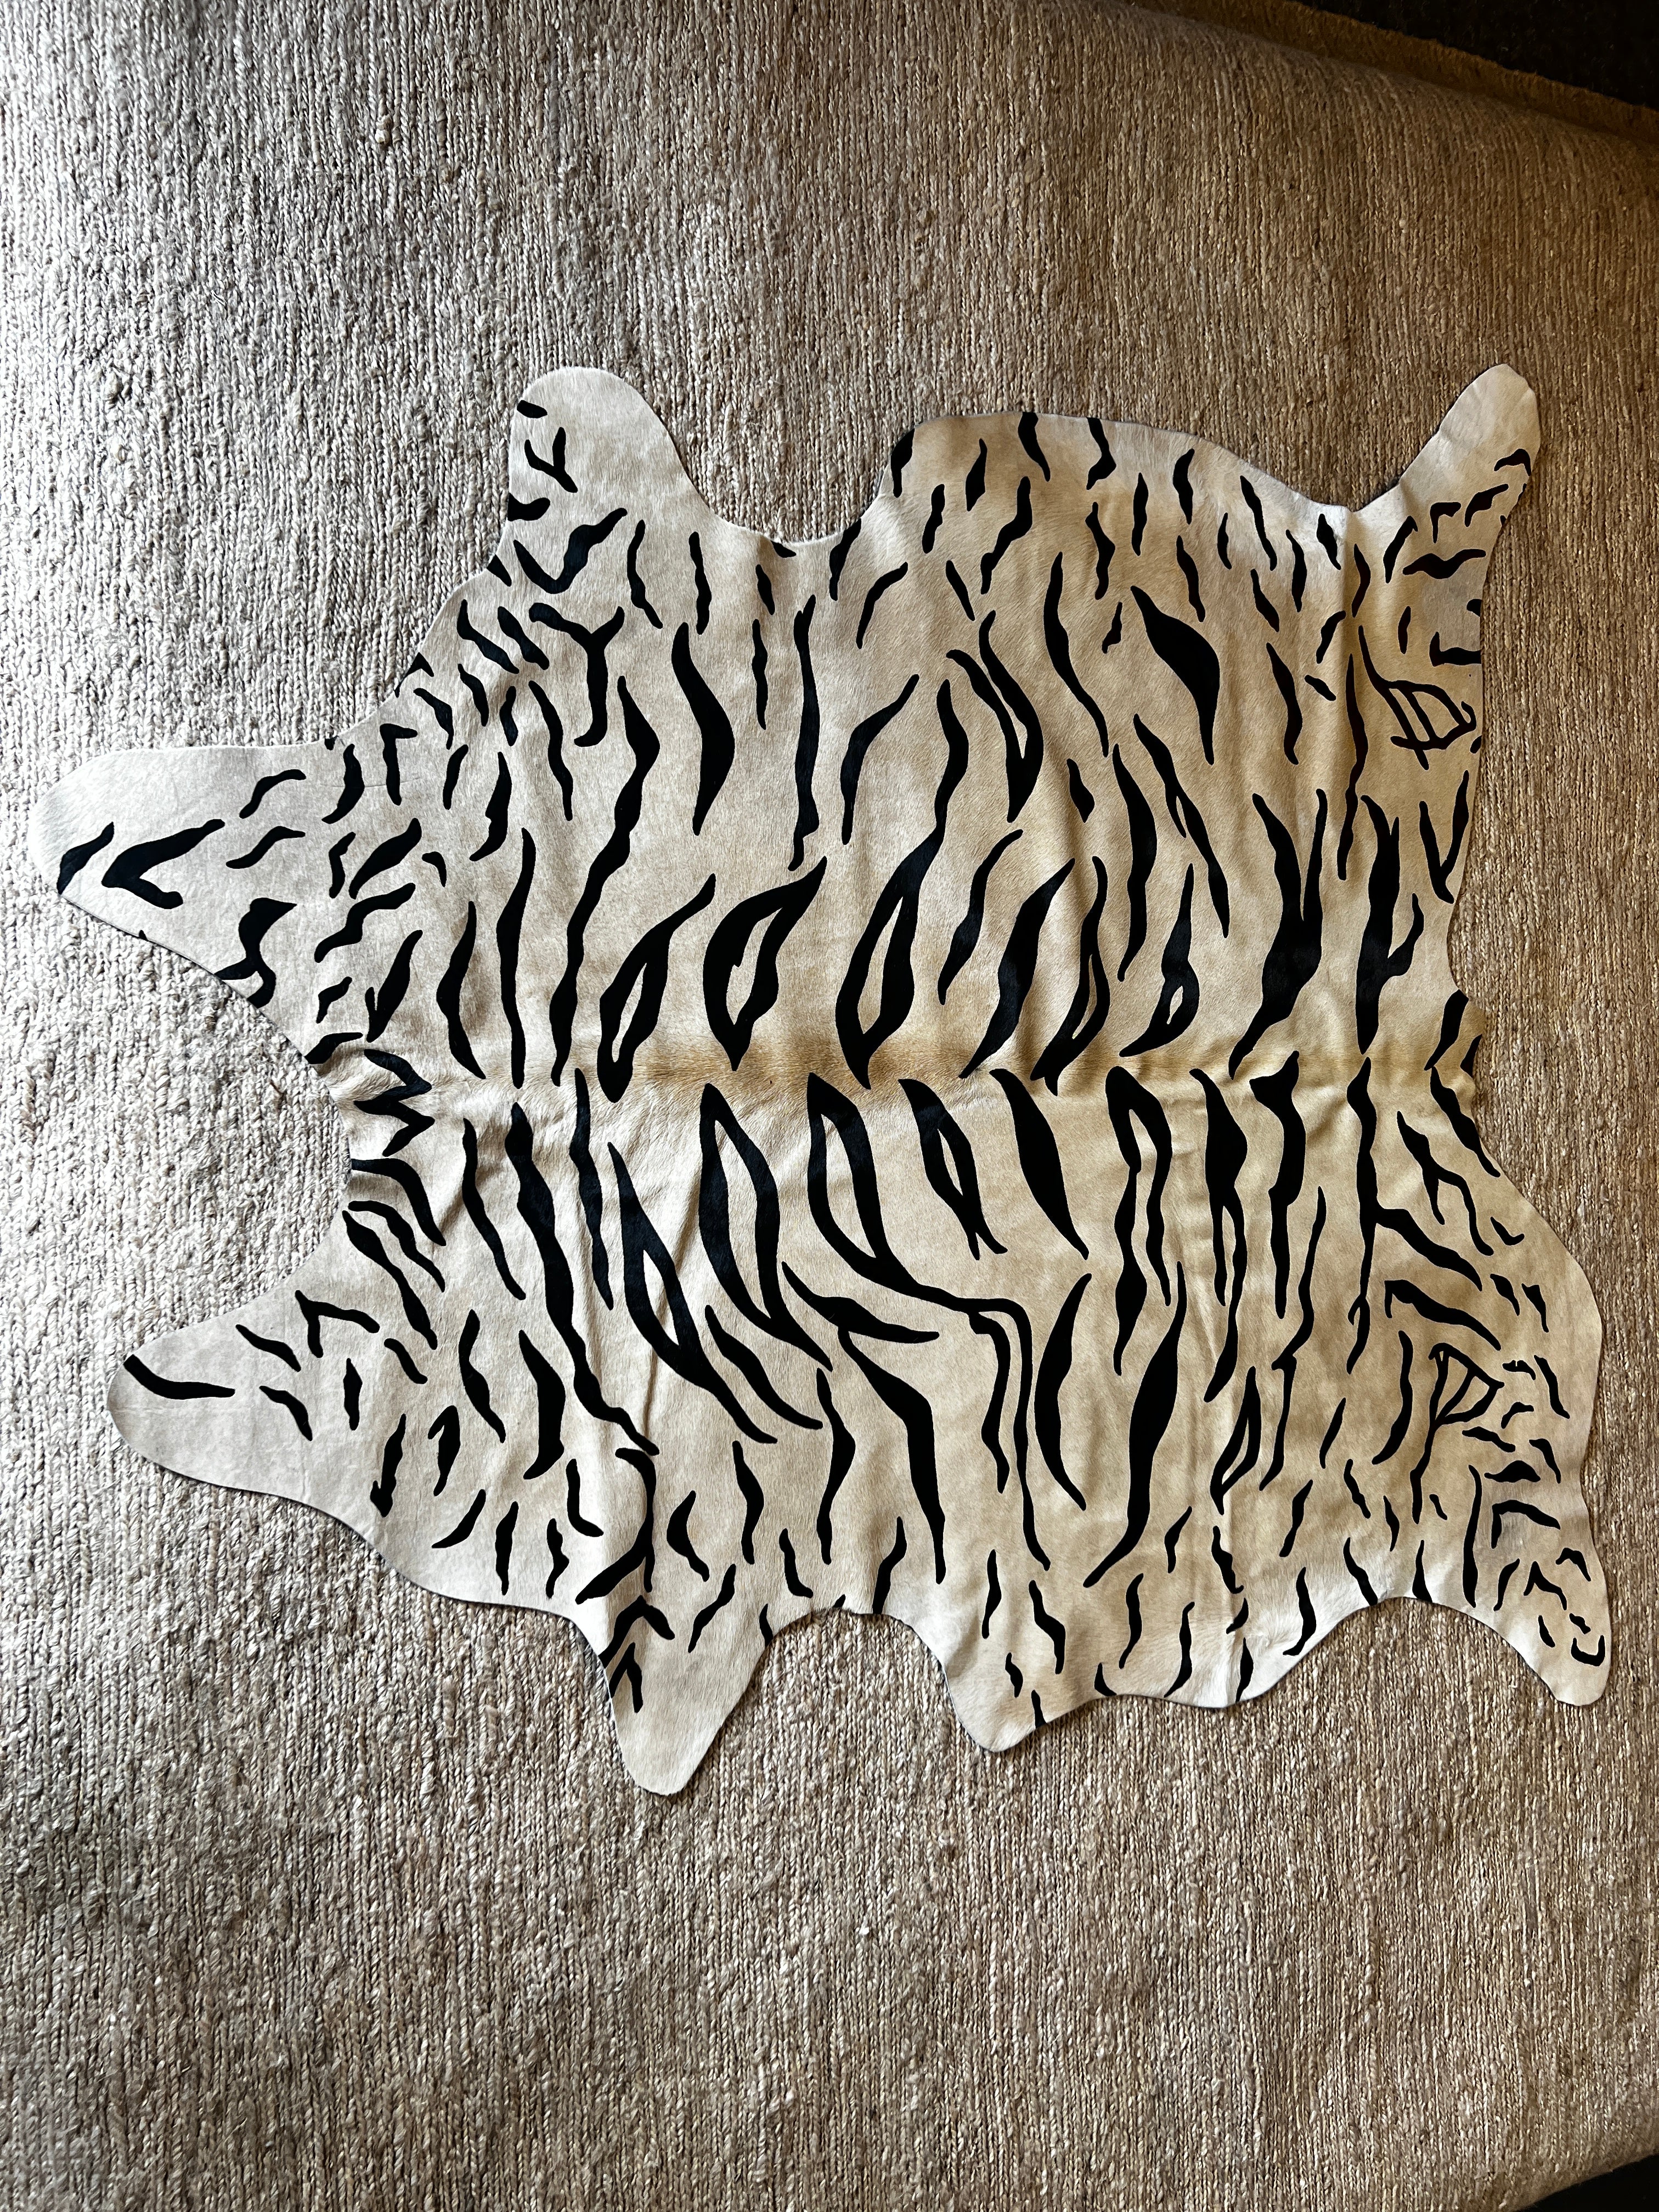 Tiger Print Cowhide Rug | Banana Manor Rug Company